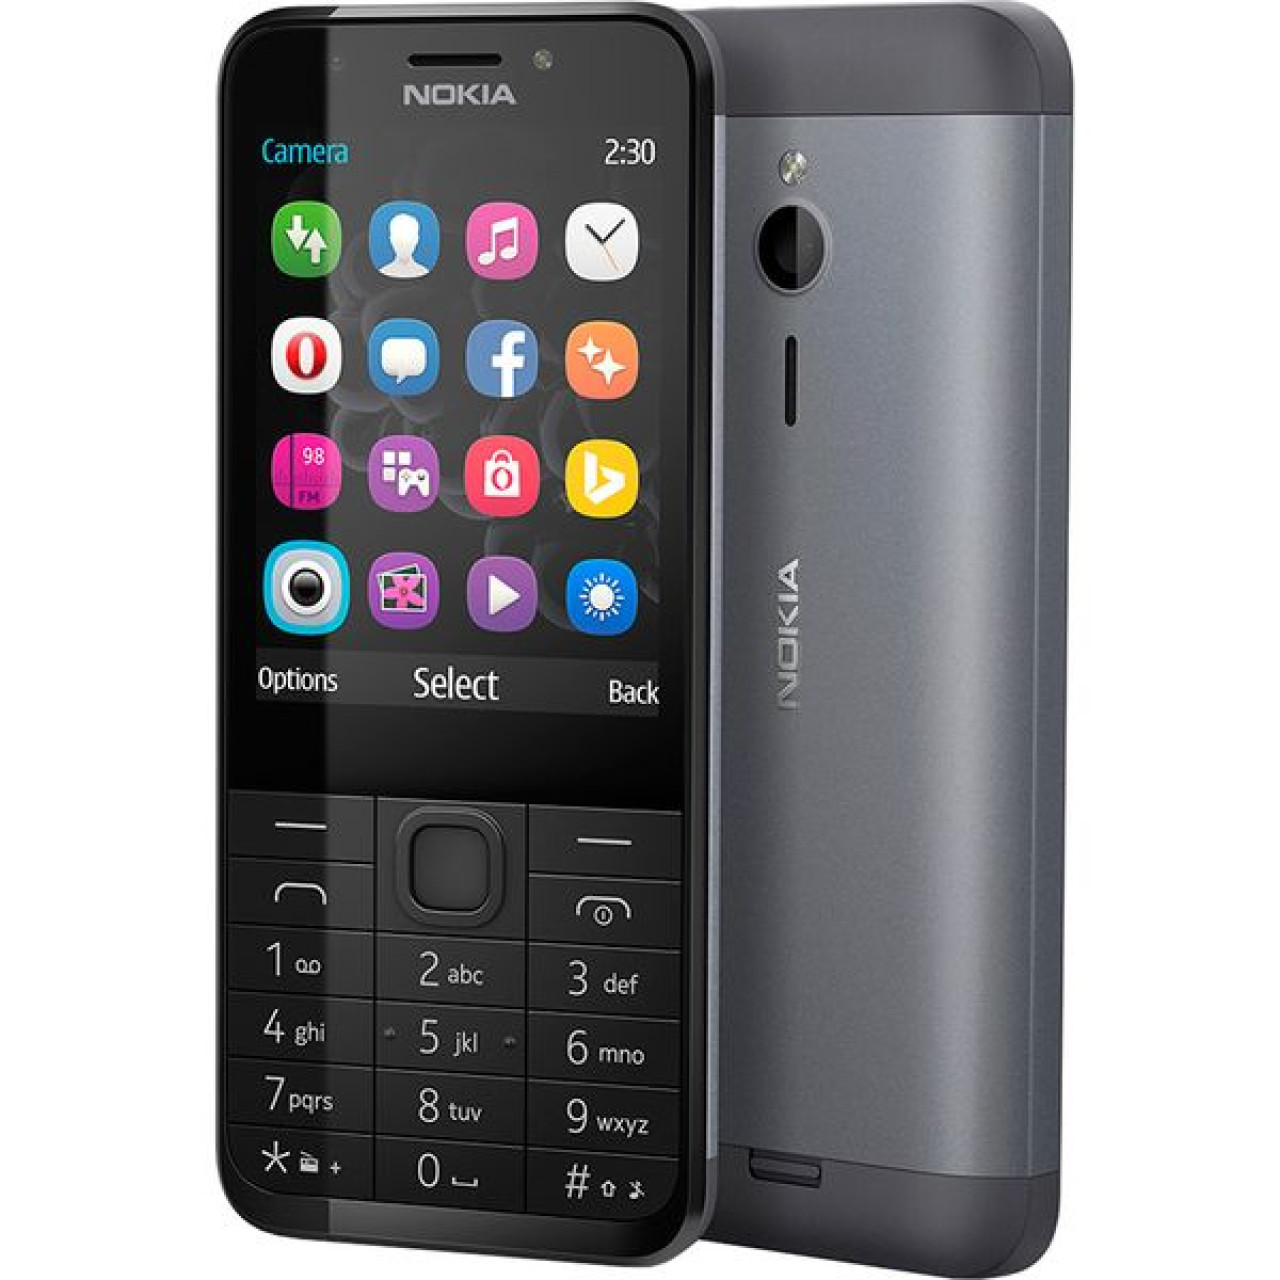 Дешевые телефоны нижний новгород. Nokia 230 Dual SIM. Nokia 230 (RM-1172). Nokia 230 Dual SIM, Black Silver. Nokia 230 DS Black Silver.